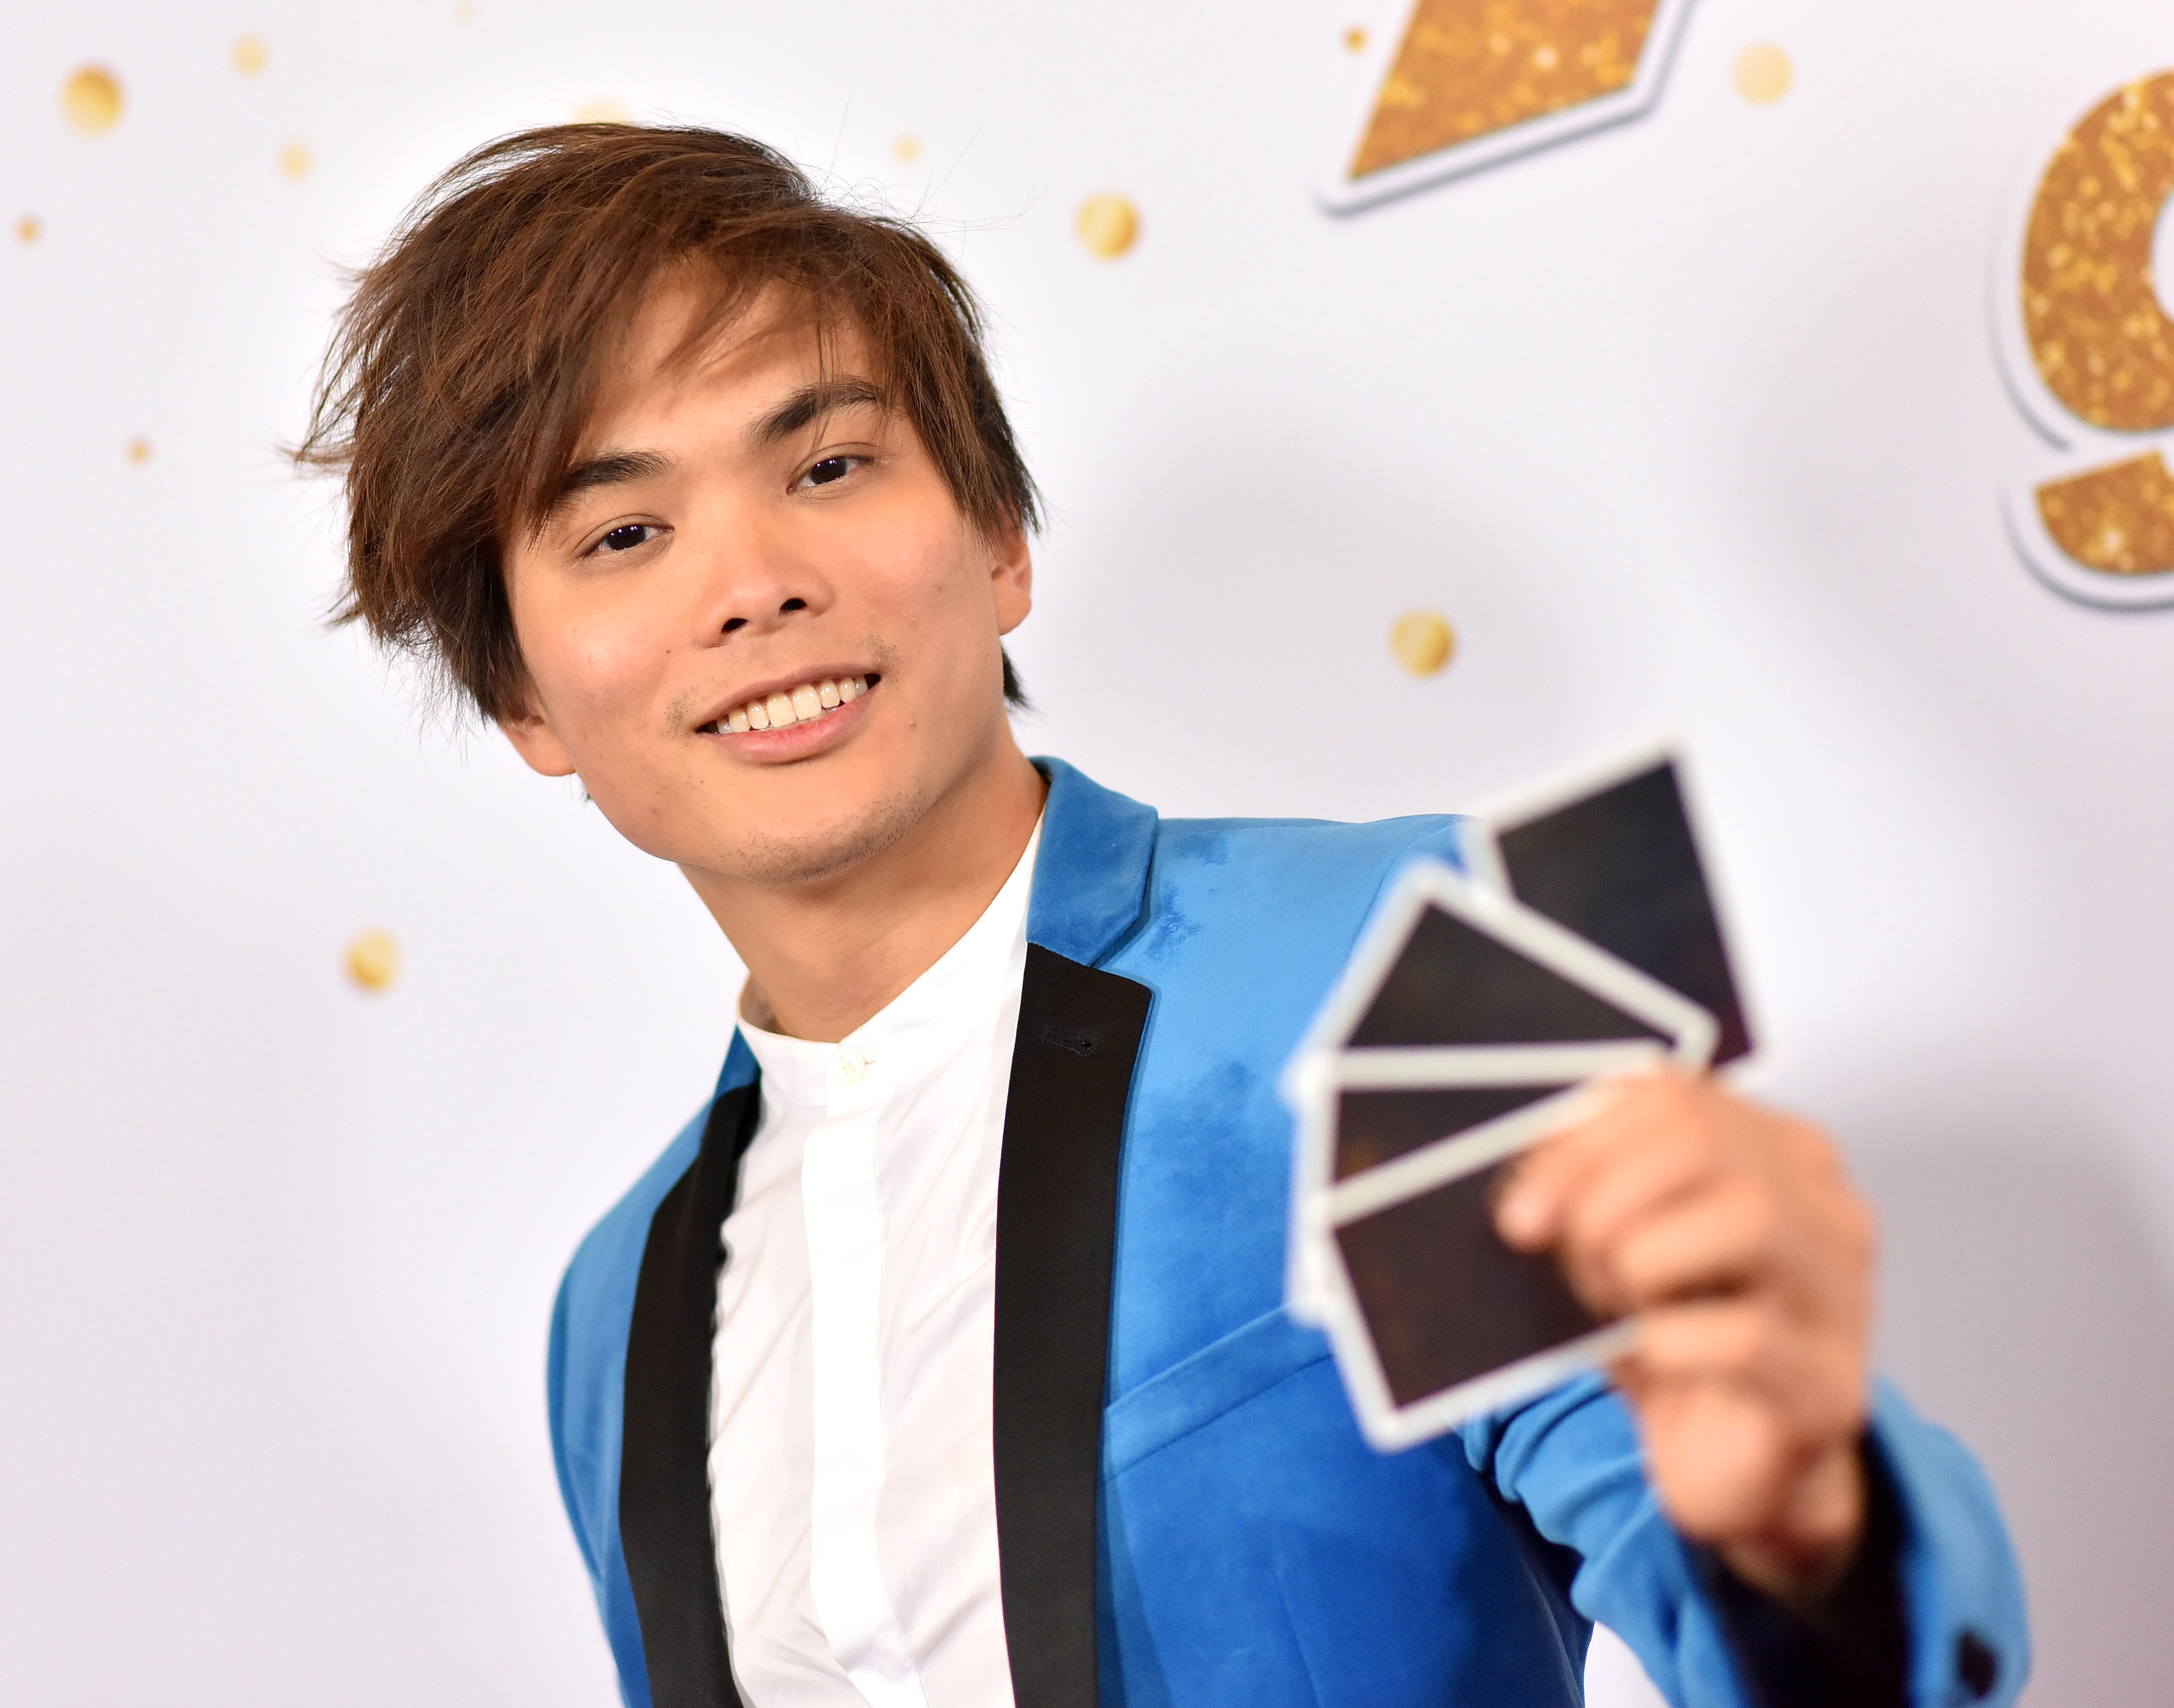 Kechi makes top 12 as magician Shin Lim wins Americas 